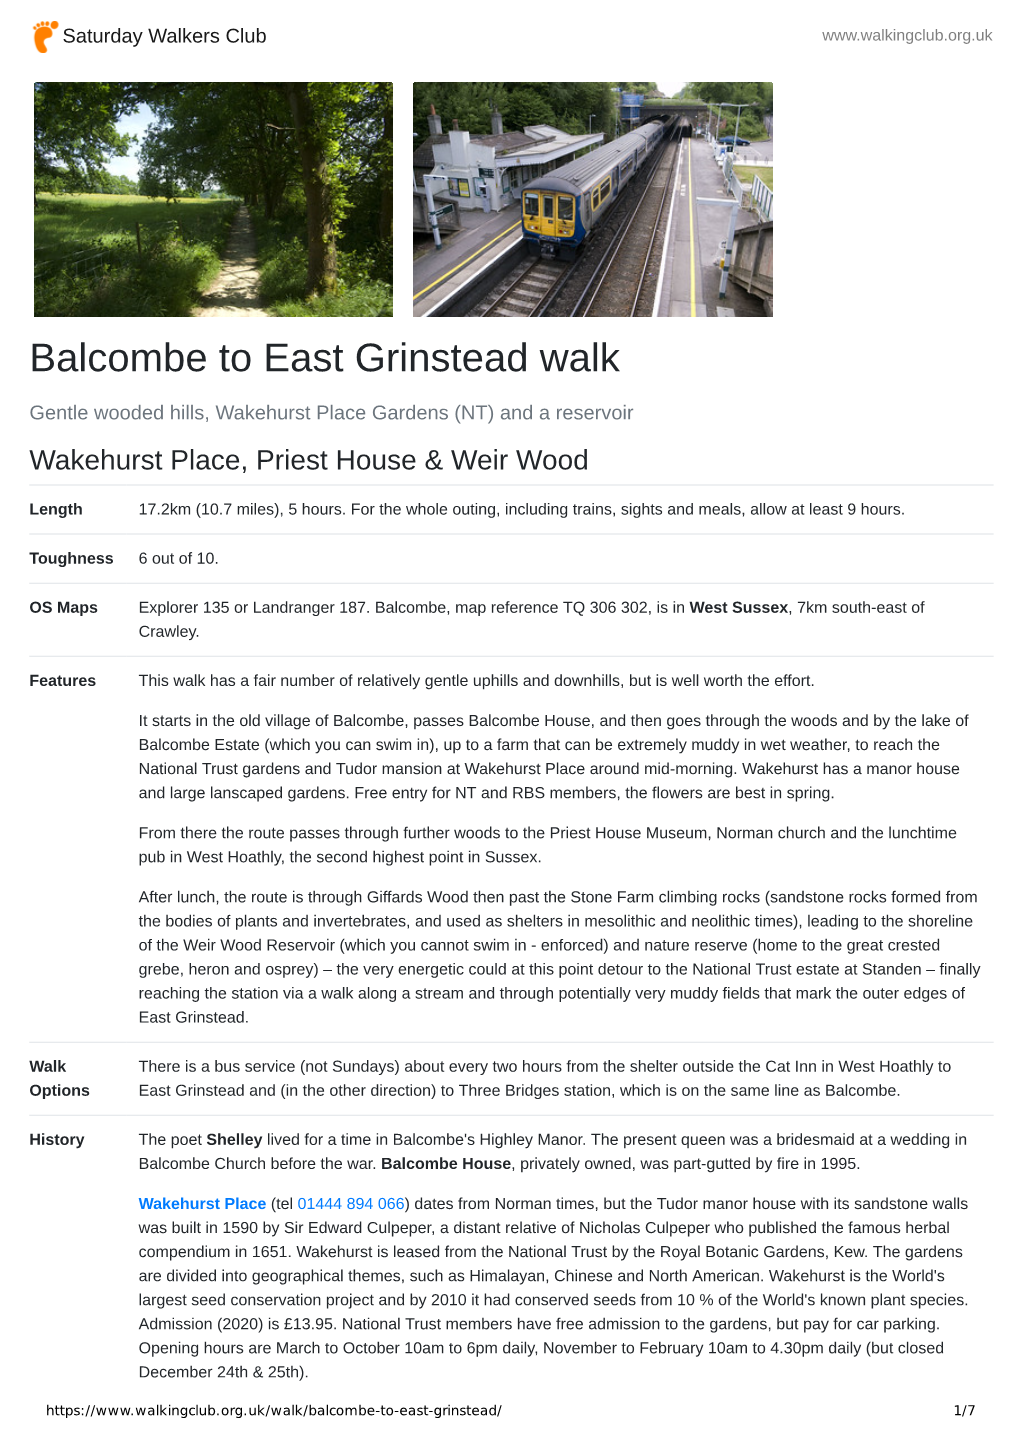 Balcombe to East Grinstead Walk